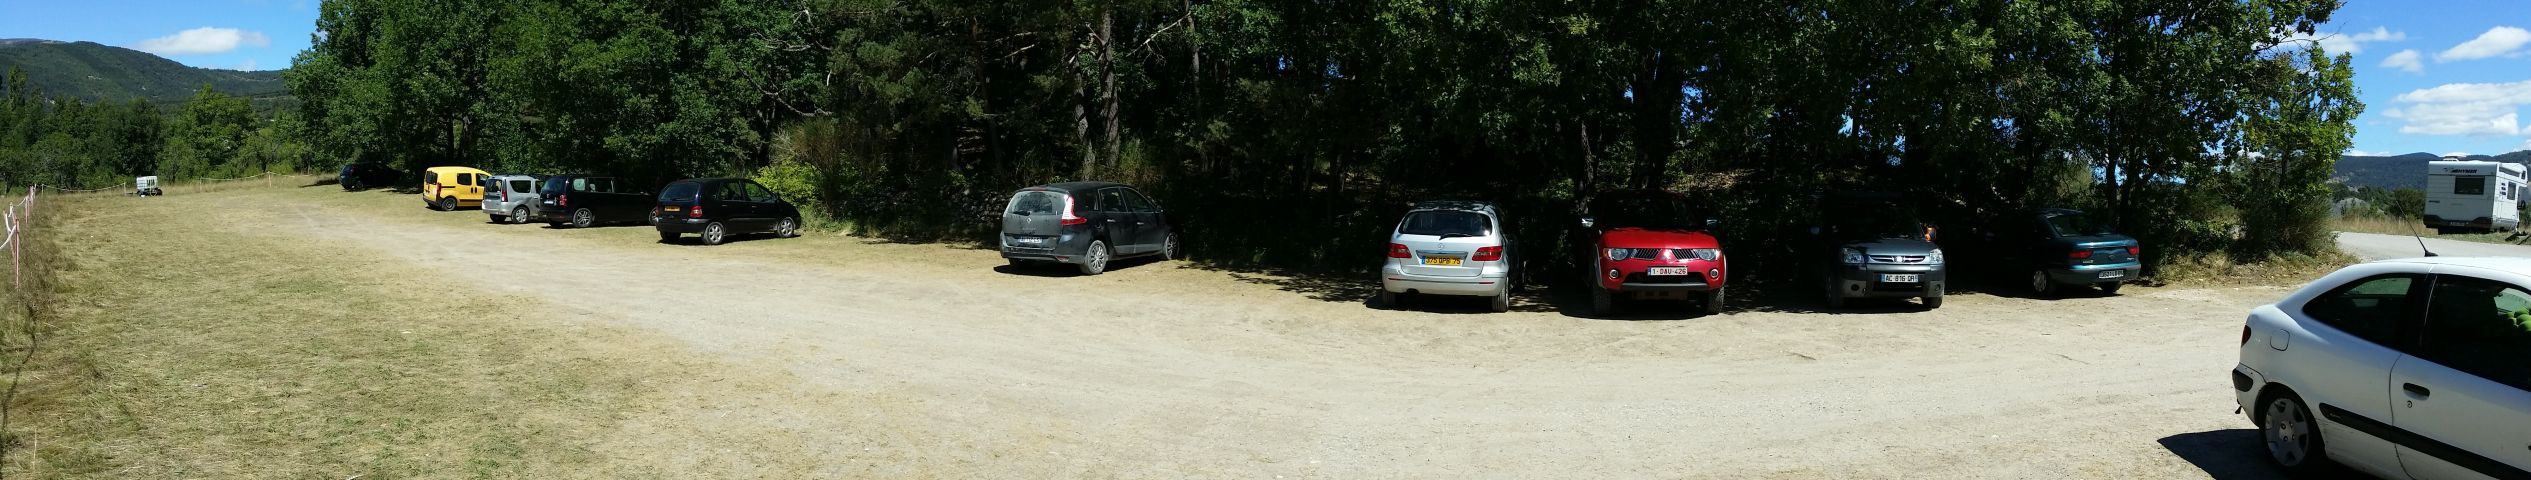  Posti auto nel parcheggio inferiore etwast irregolare. 